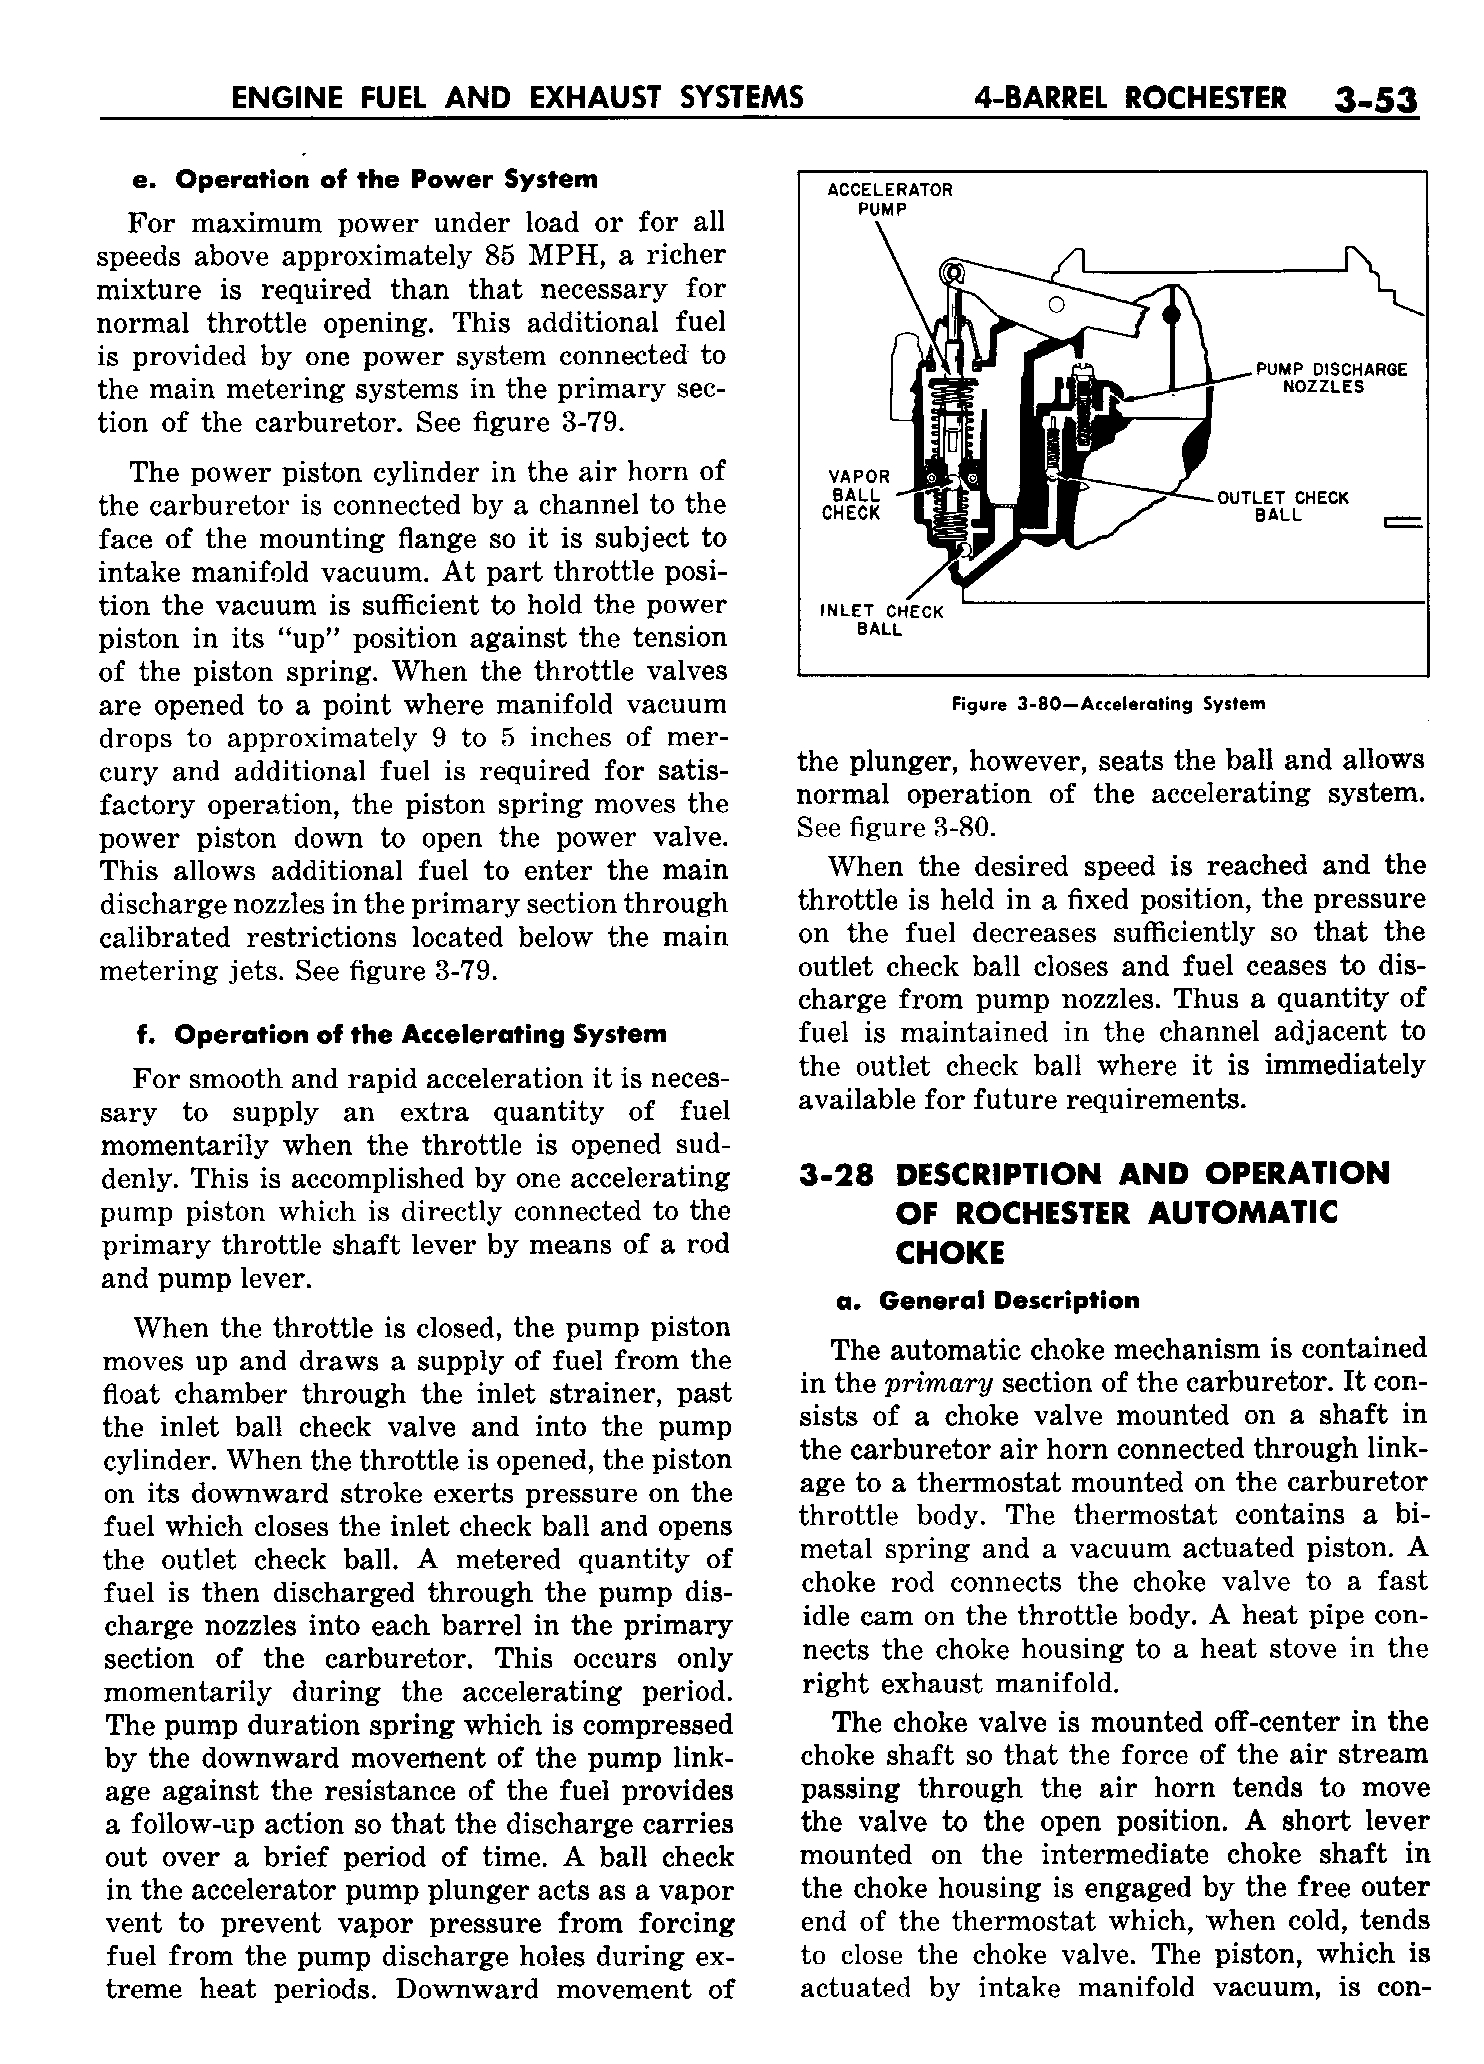 n_04 1958 Buick Shop Manual - Engine Fuel & Exhaust_53.jpg